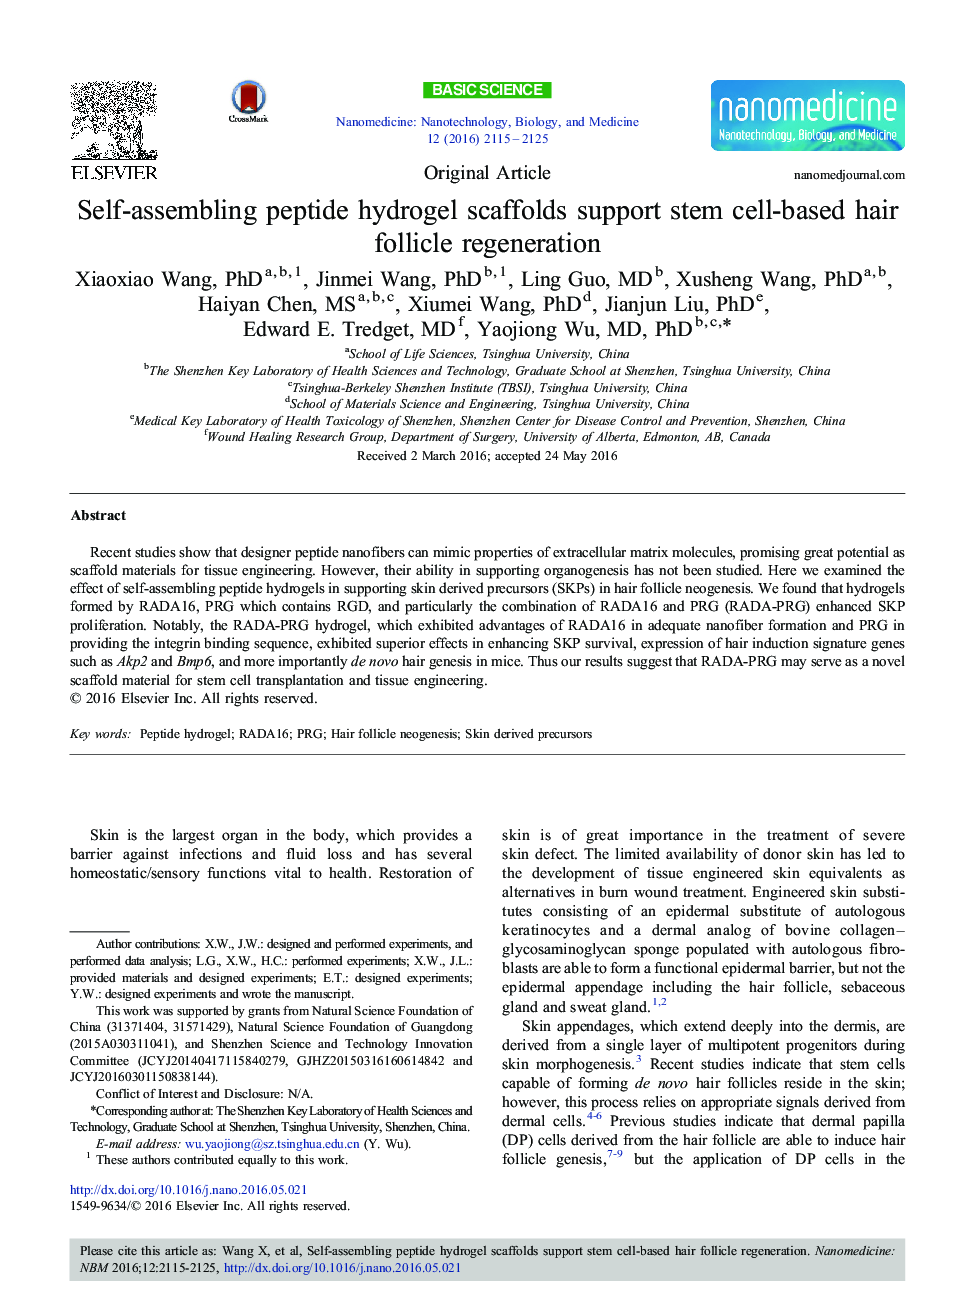 Original ArticleSelf-assembling peptide hydrogel scaffolds support stem cell-based hair follicle regeneration